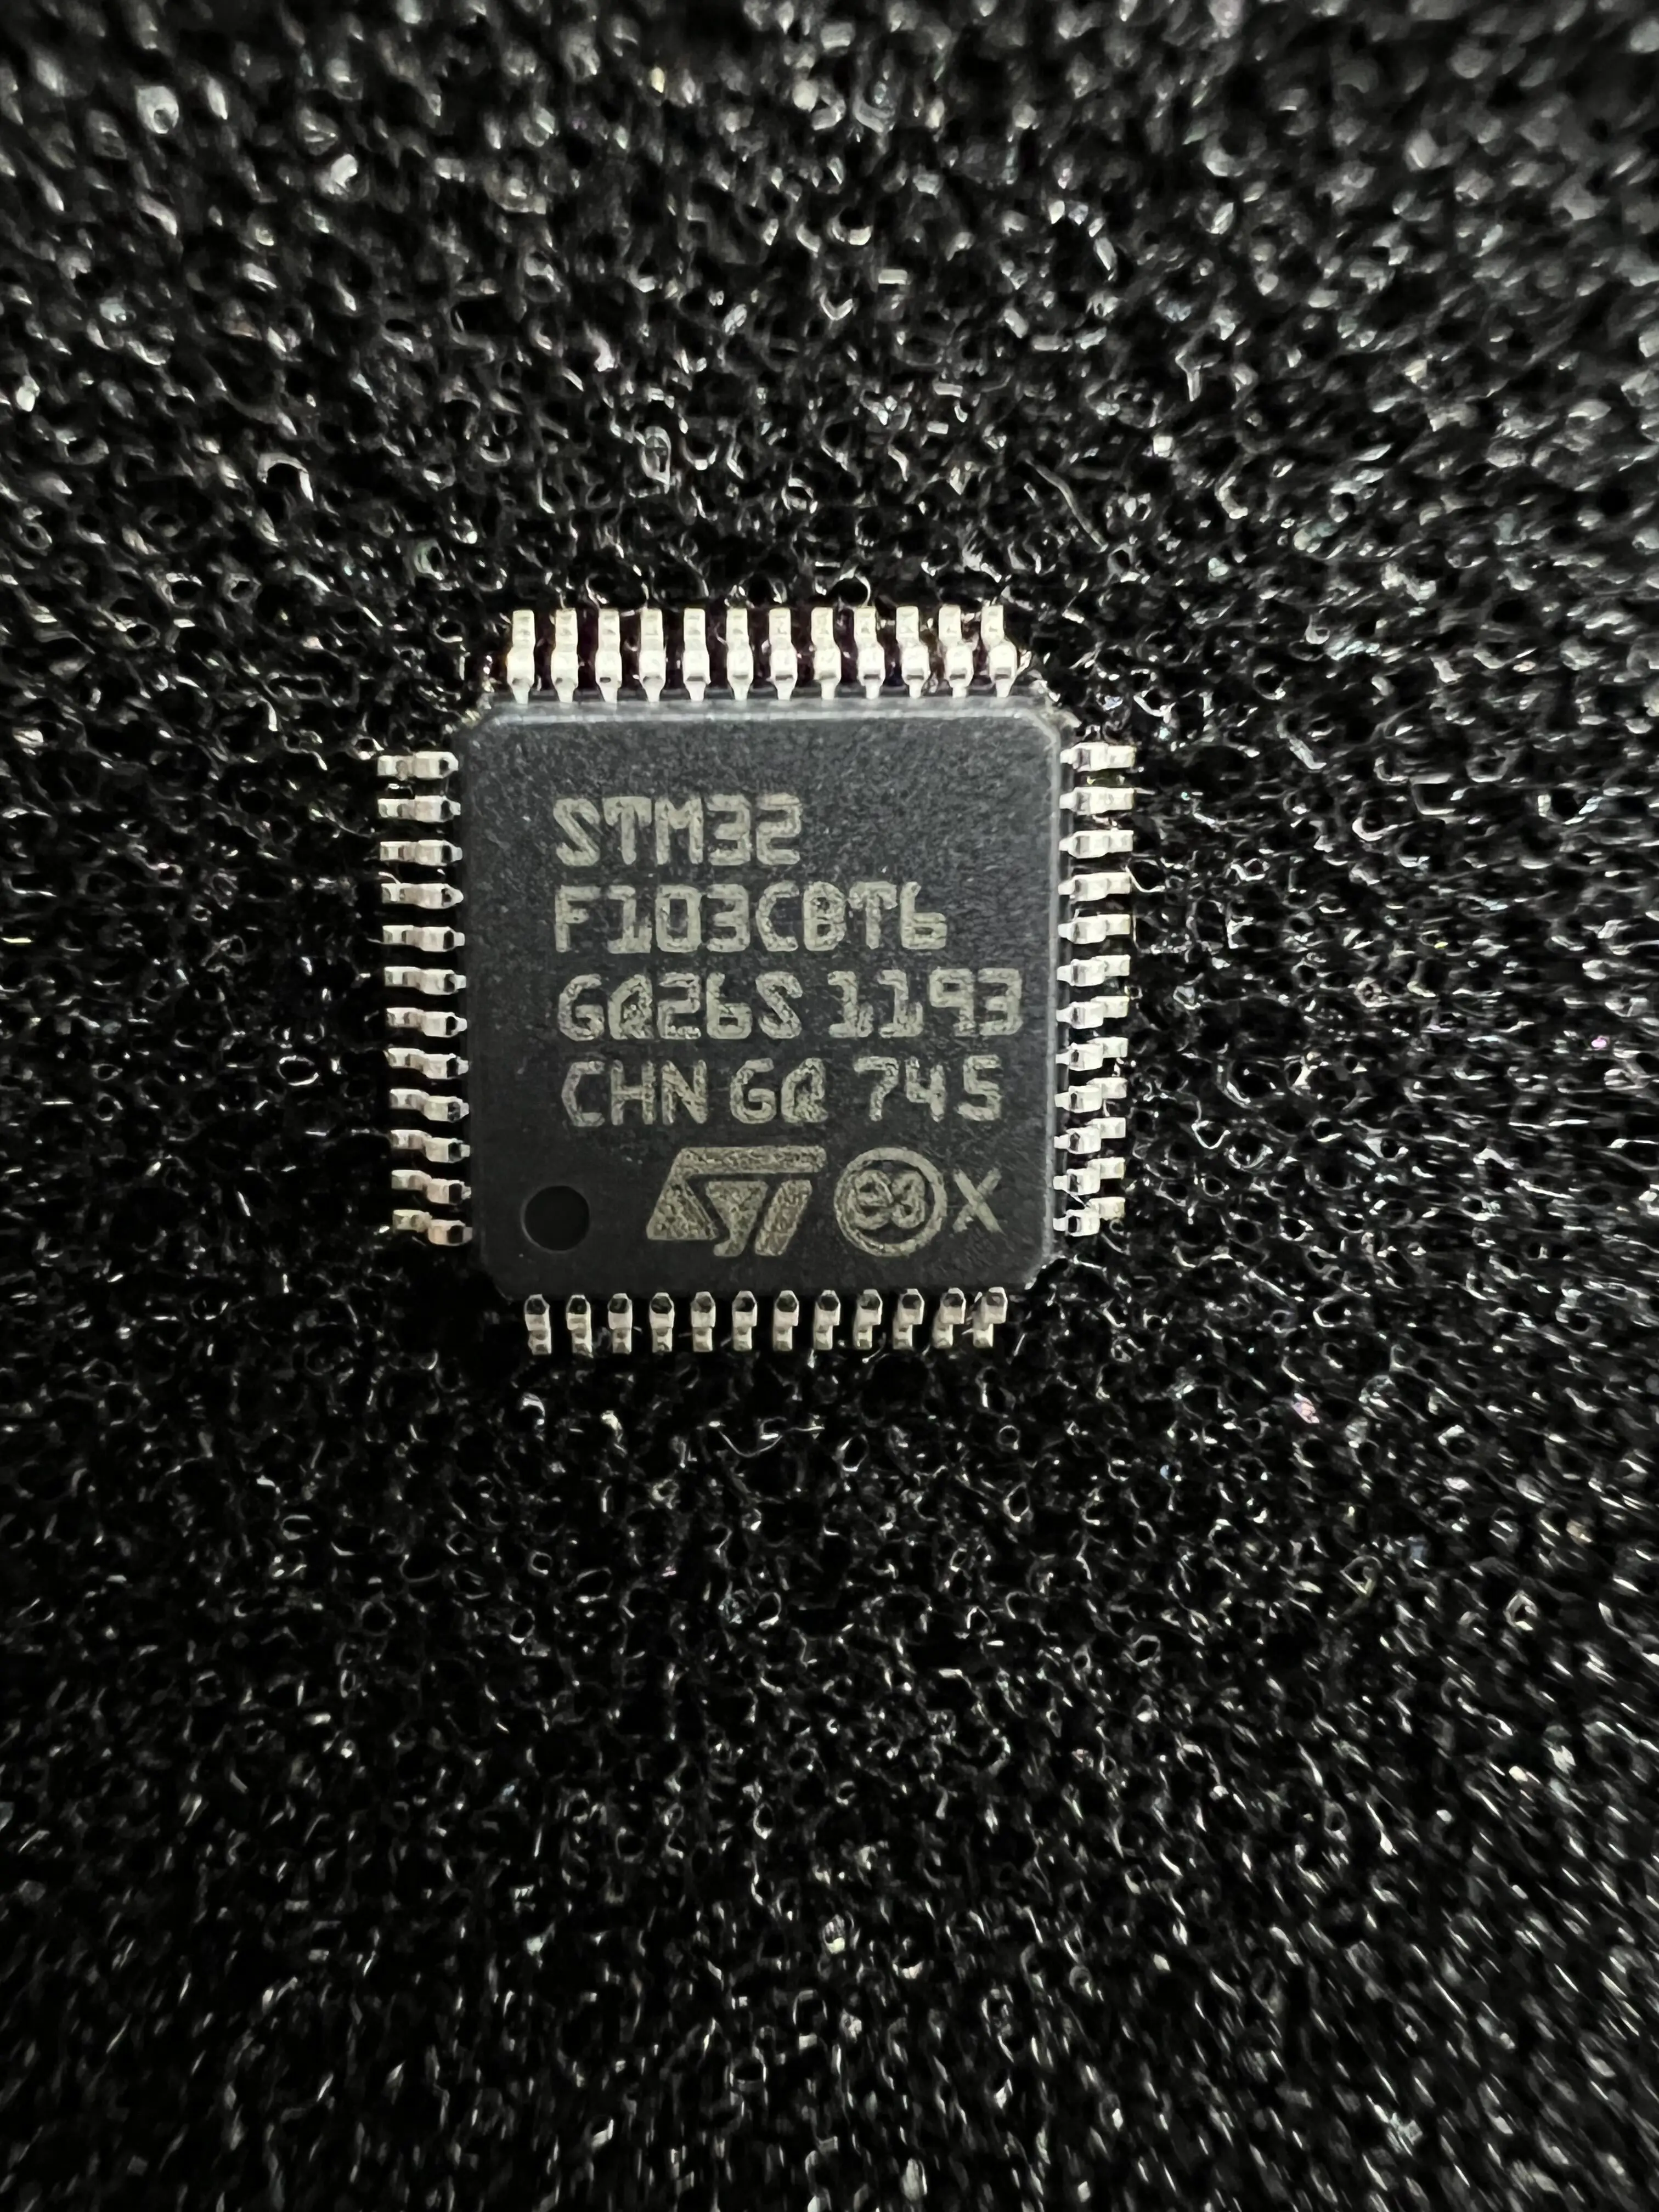 

(CPU&Microcontroller) STM32F103CBT6